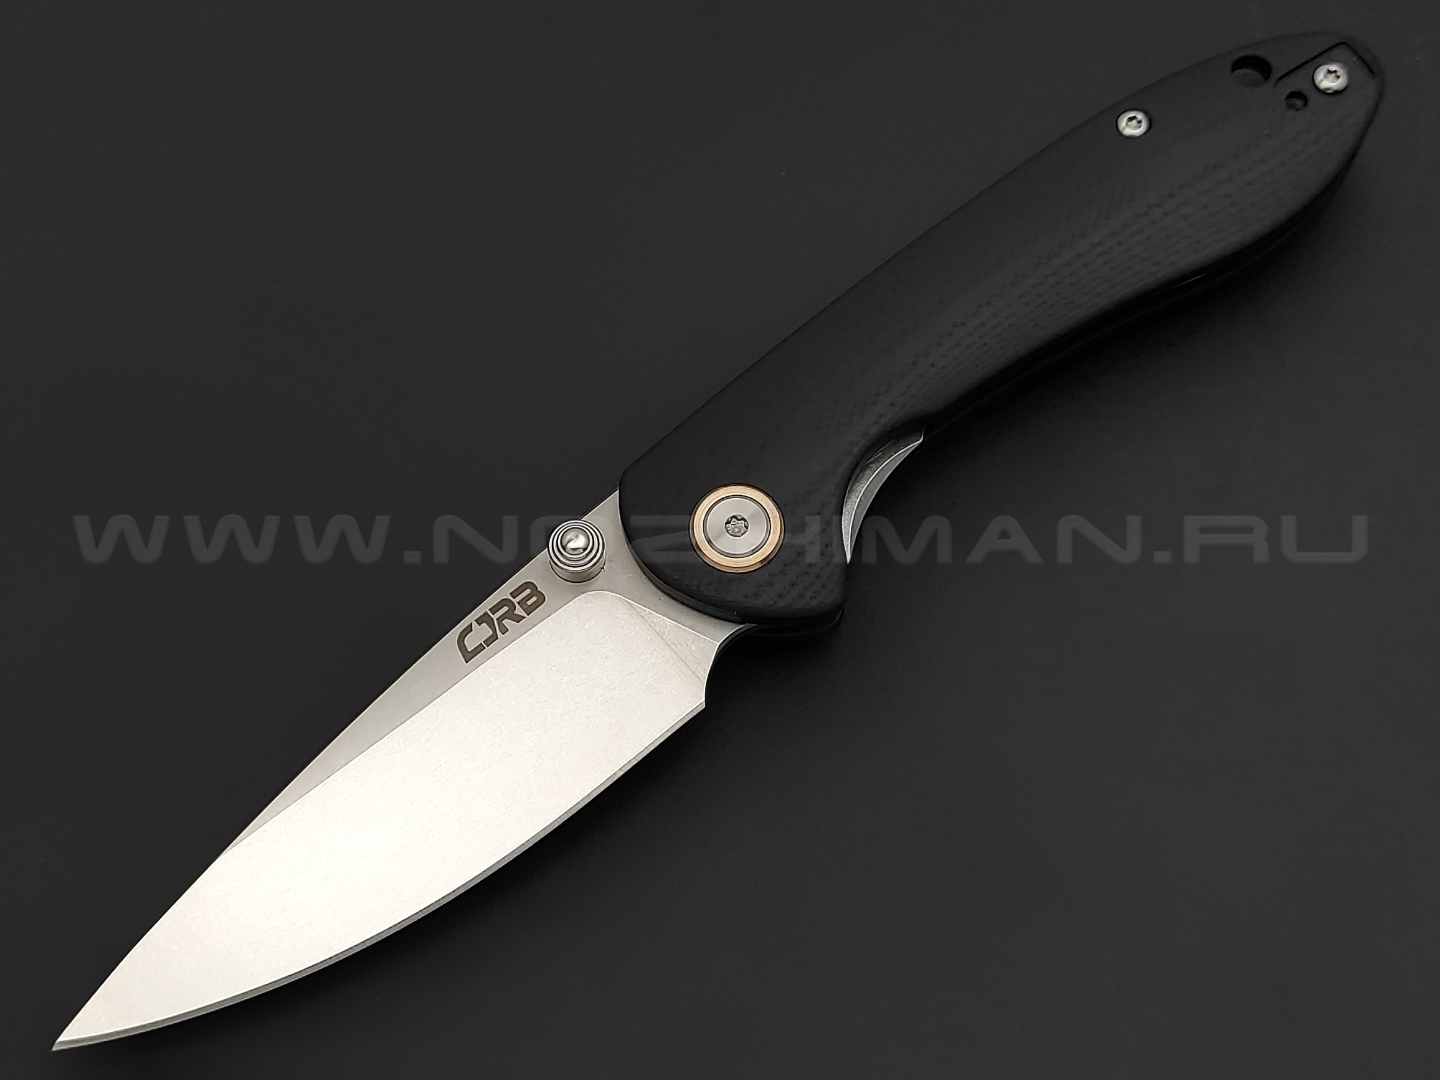 Нож CJRB Small Feldspar J1912S-BKC сталь D2, рукоять G10 black